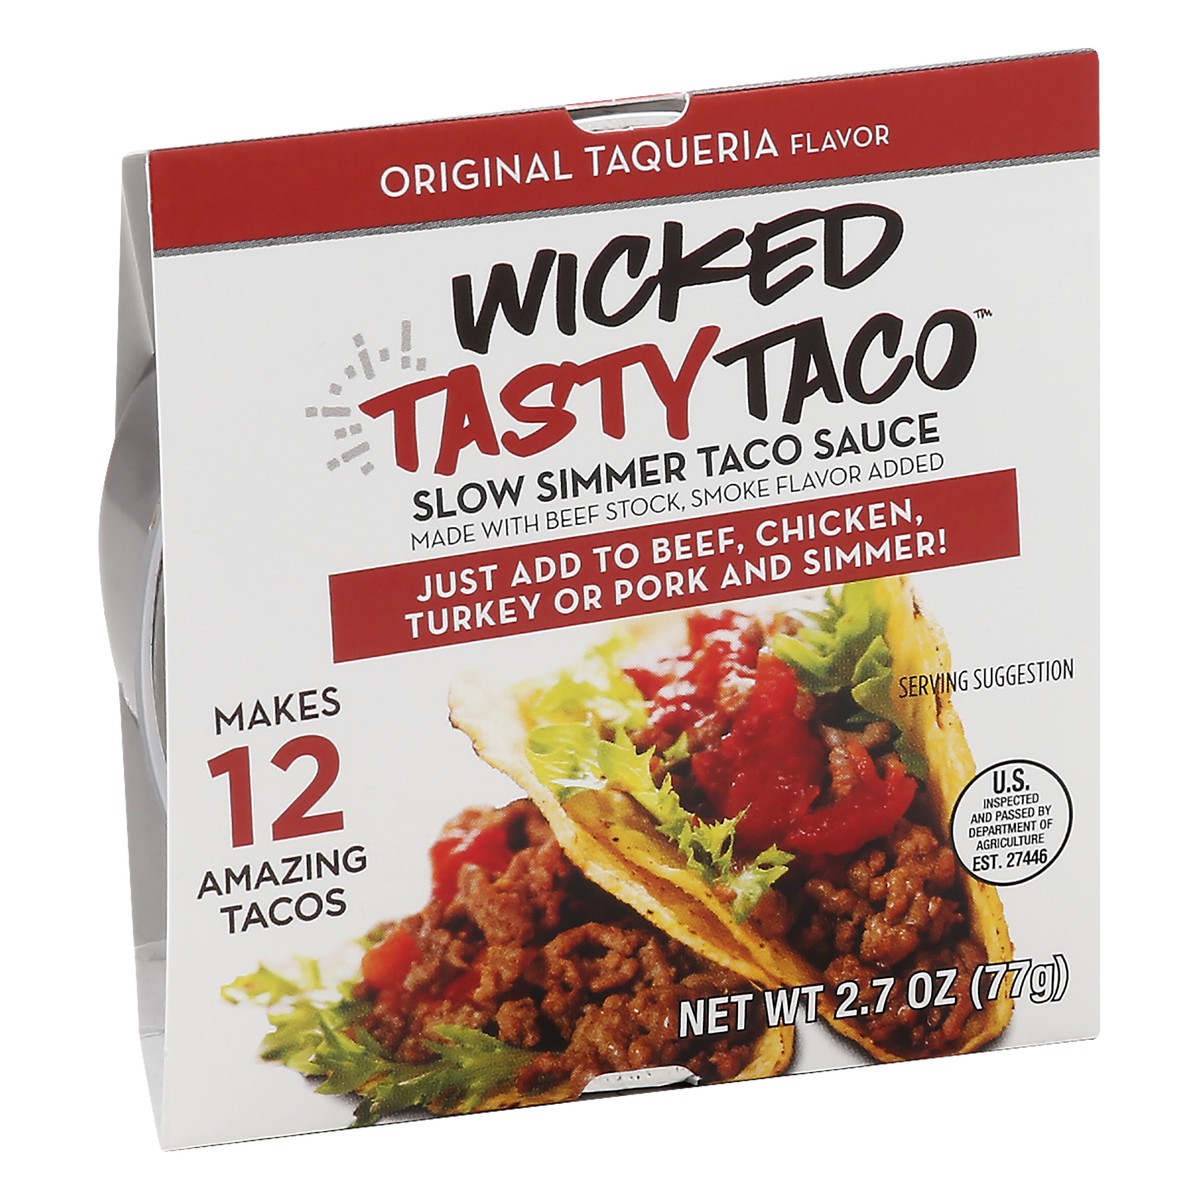 slide 7 of 13, Wicked Tasty Taco Slow Simmer Original Taqueria Flavor Taco Sauce 2.7 oz, 2.7 oz